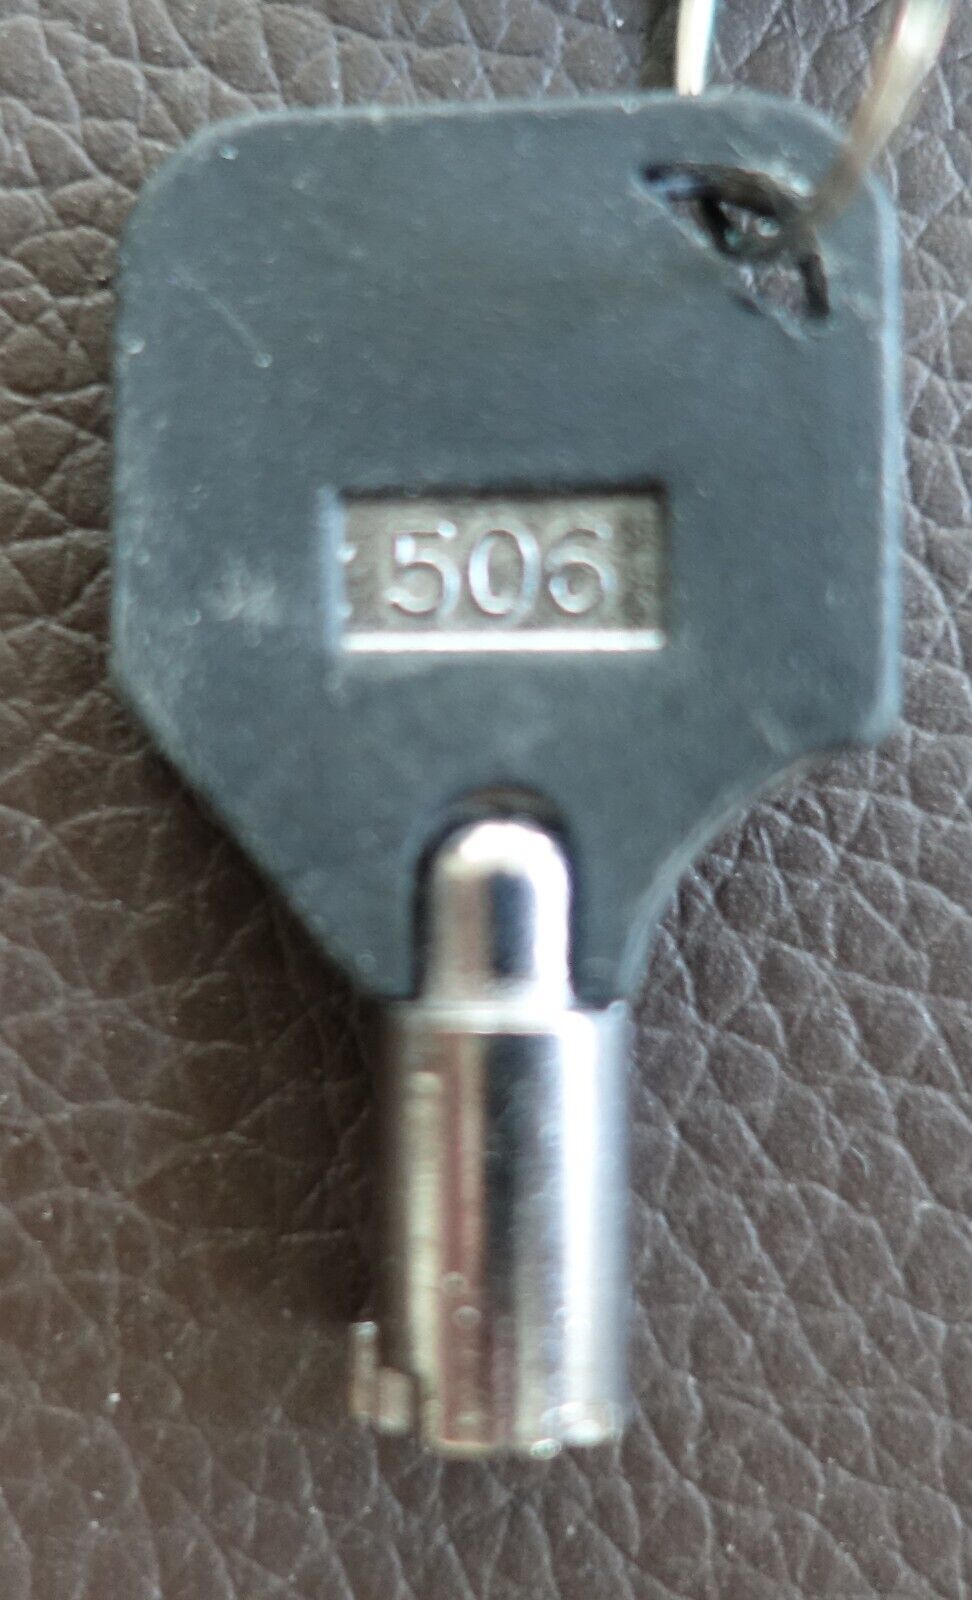 Tubular Barrel Locking Key 506 For Computer Hard Drive Caddy